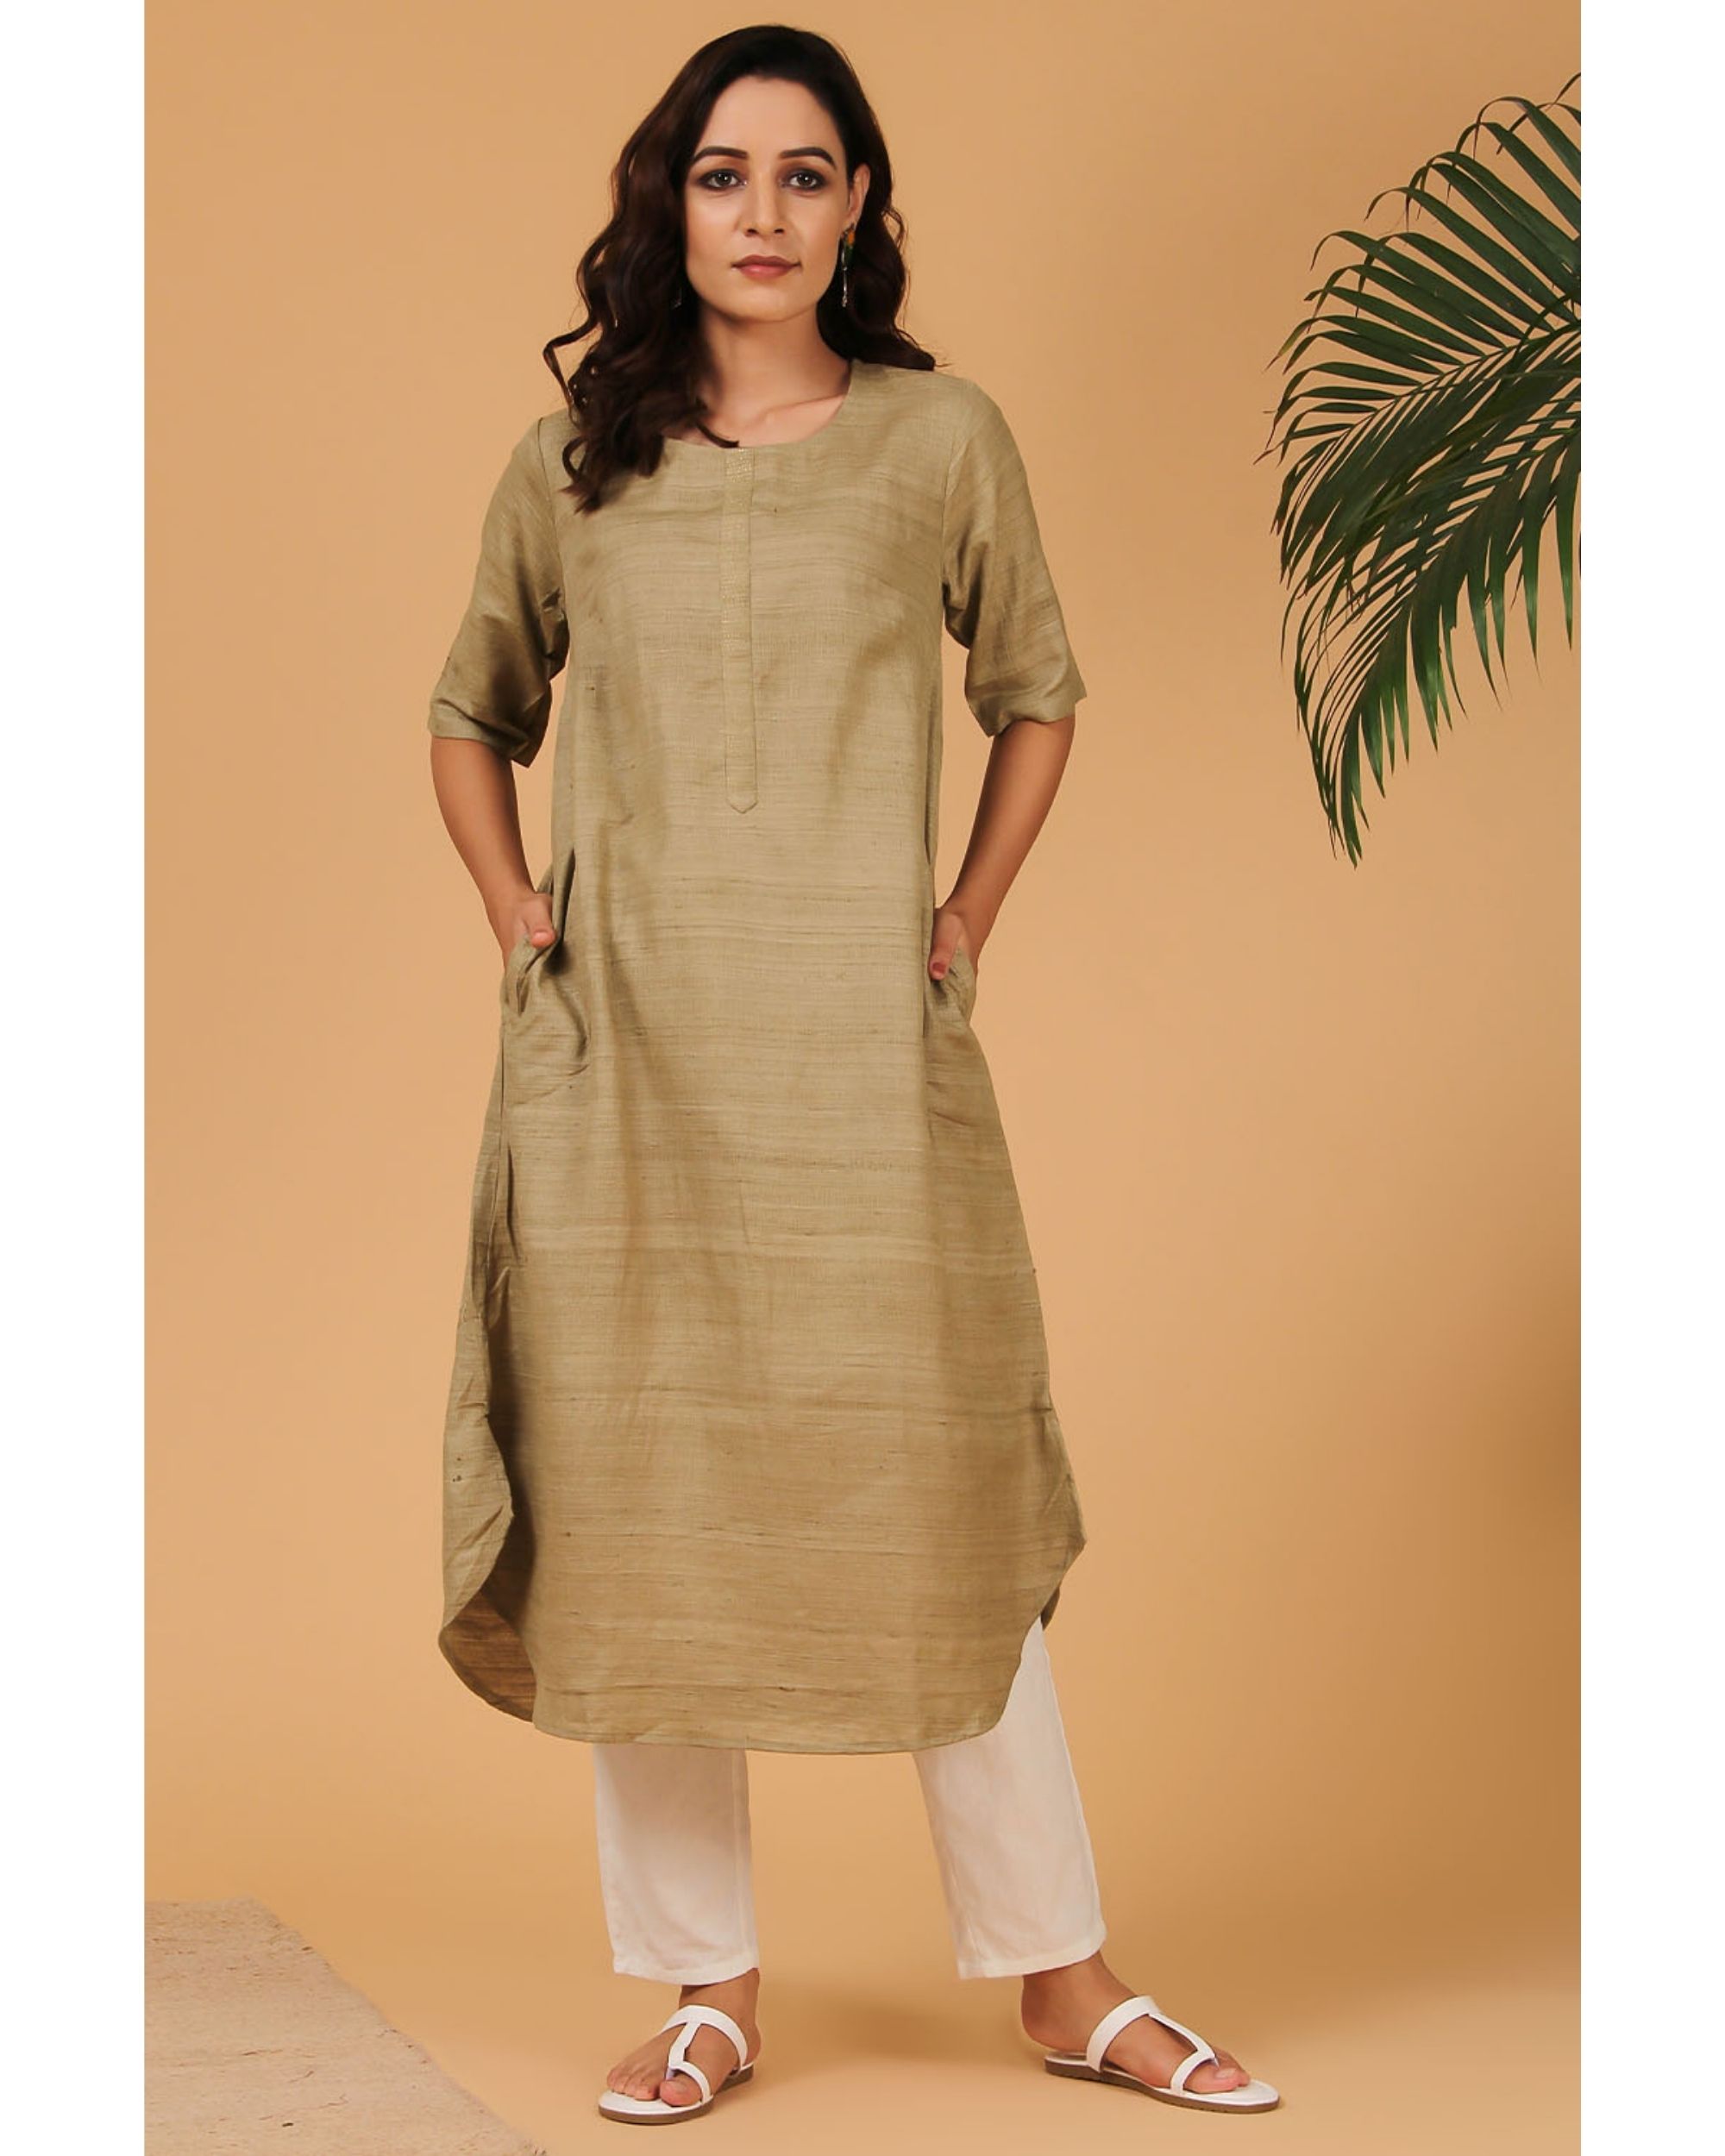 Beige bhagalpuri silk kurta with pockets